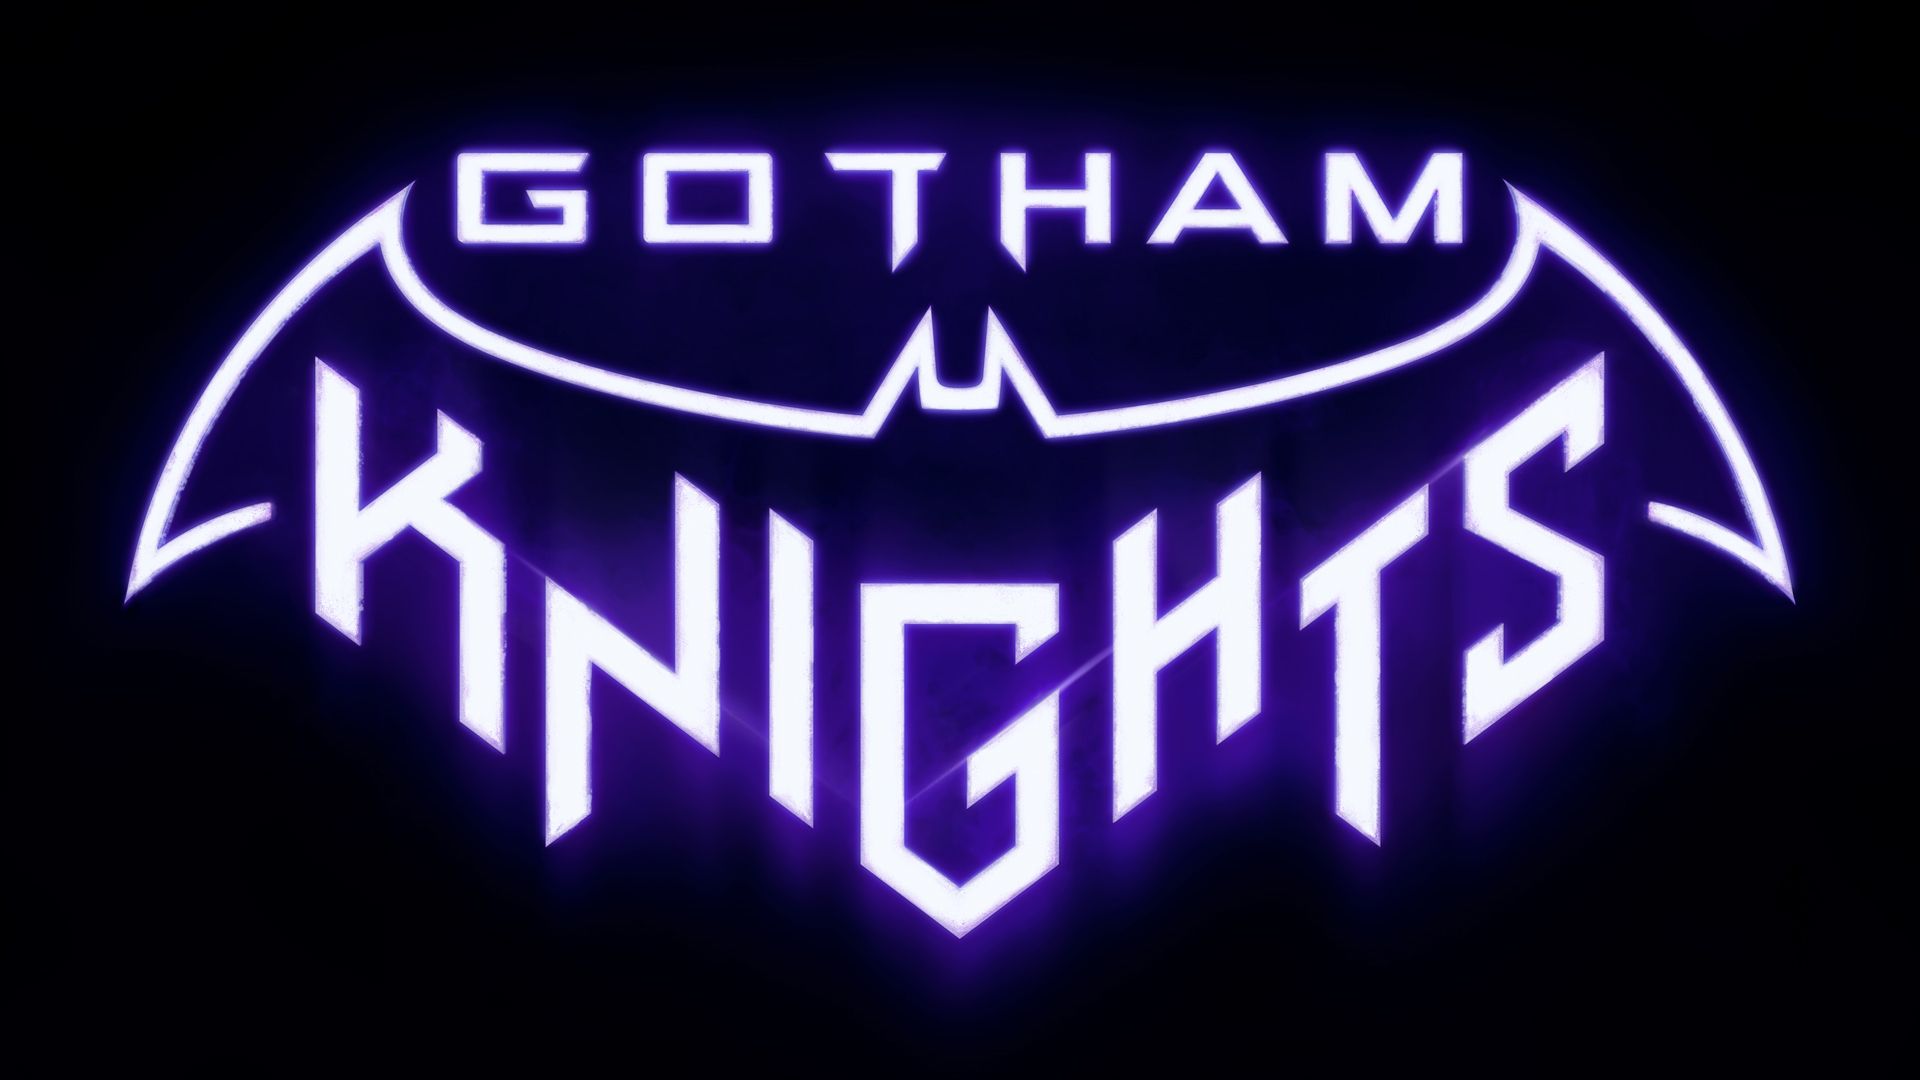 ps5 gotham knights download free